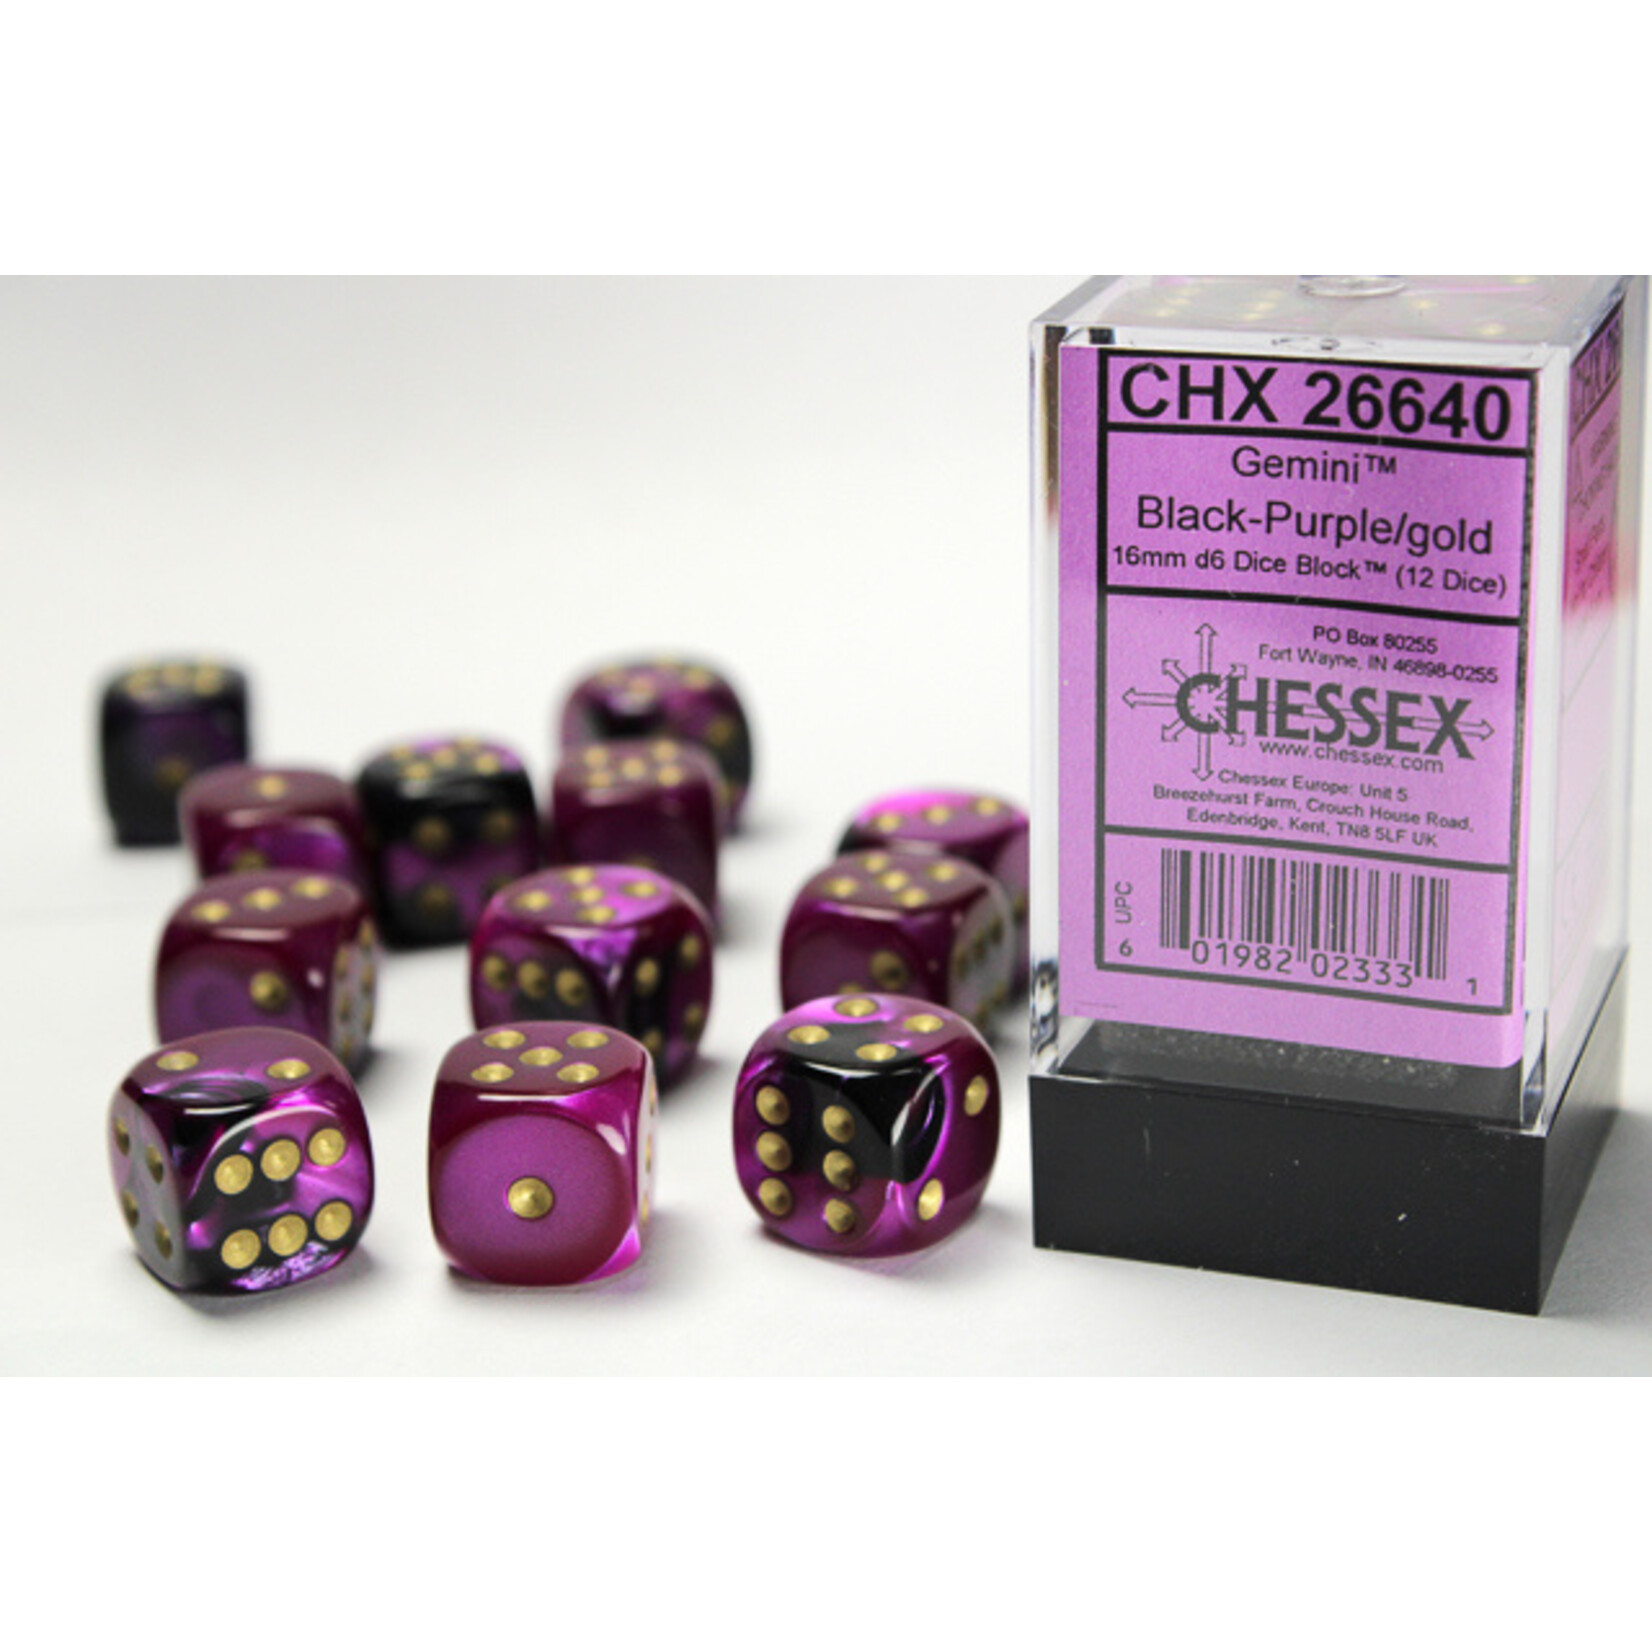 Chessex Chessex 12 x D6 Set Gemini 16mm - Black-Purple/Gold